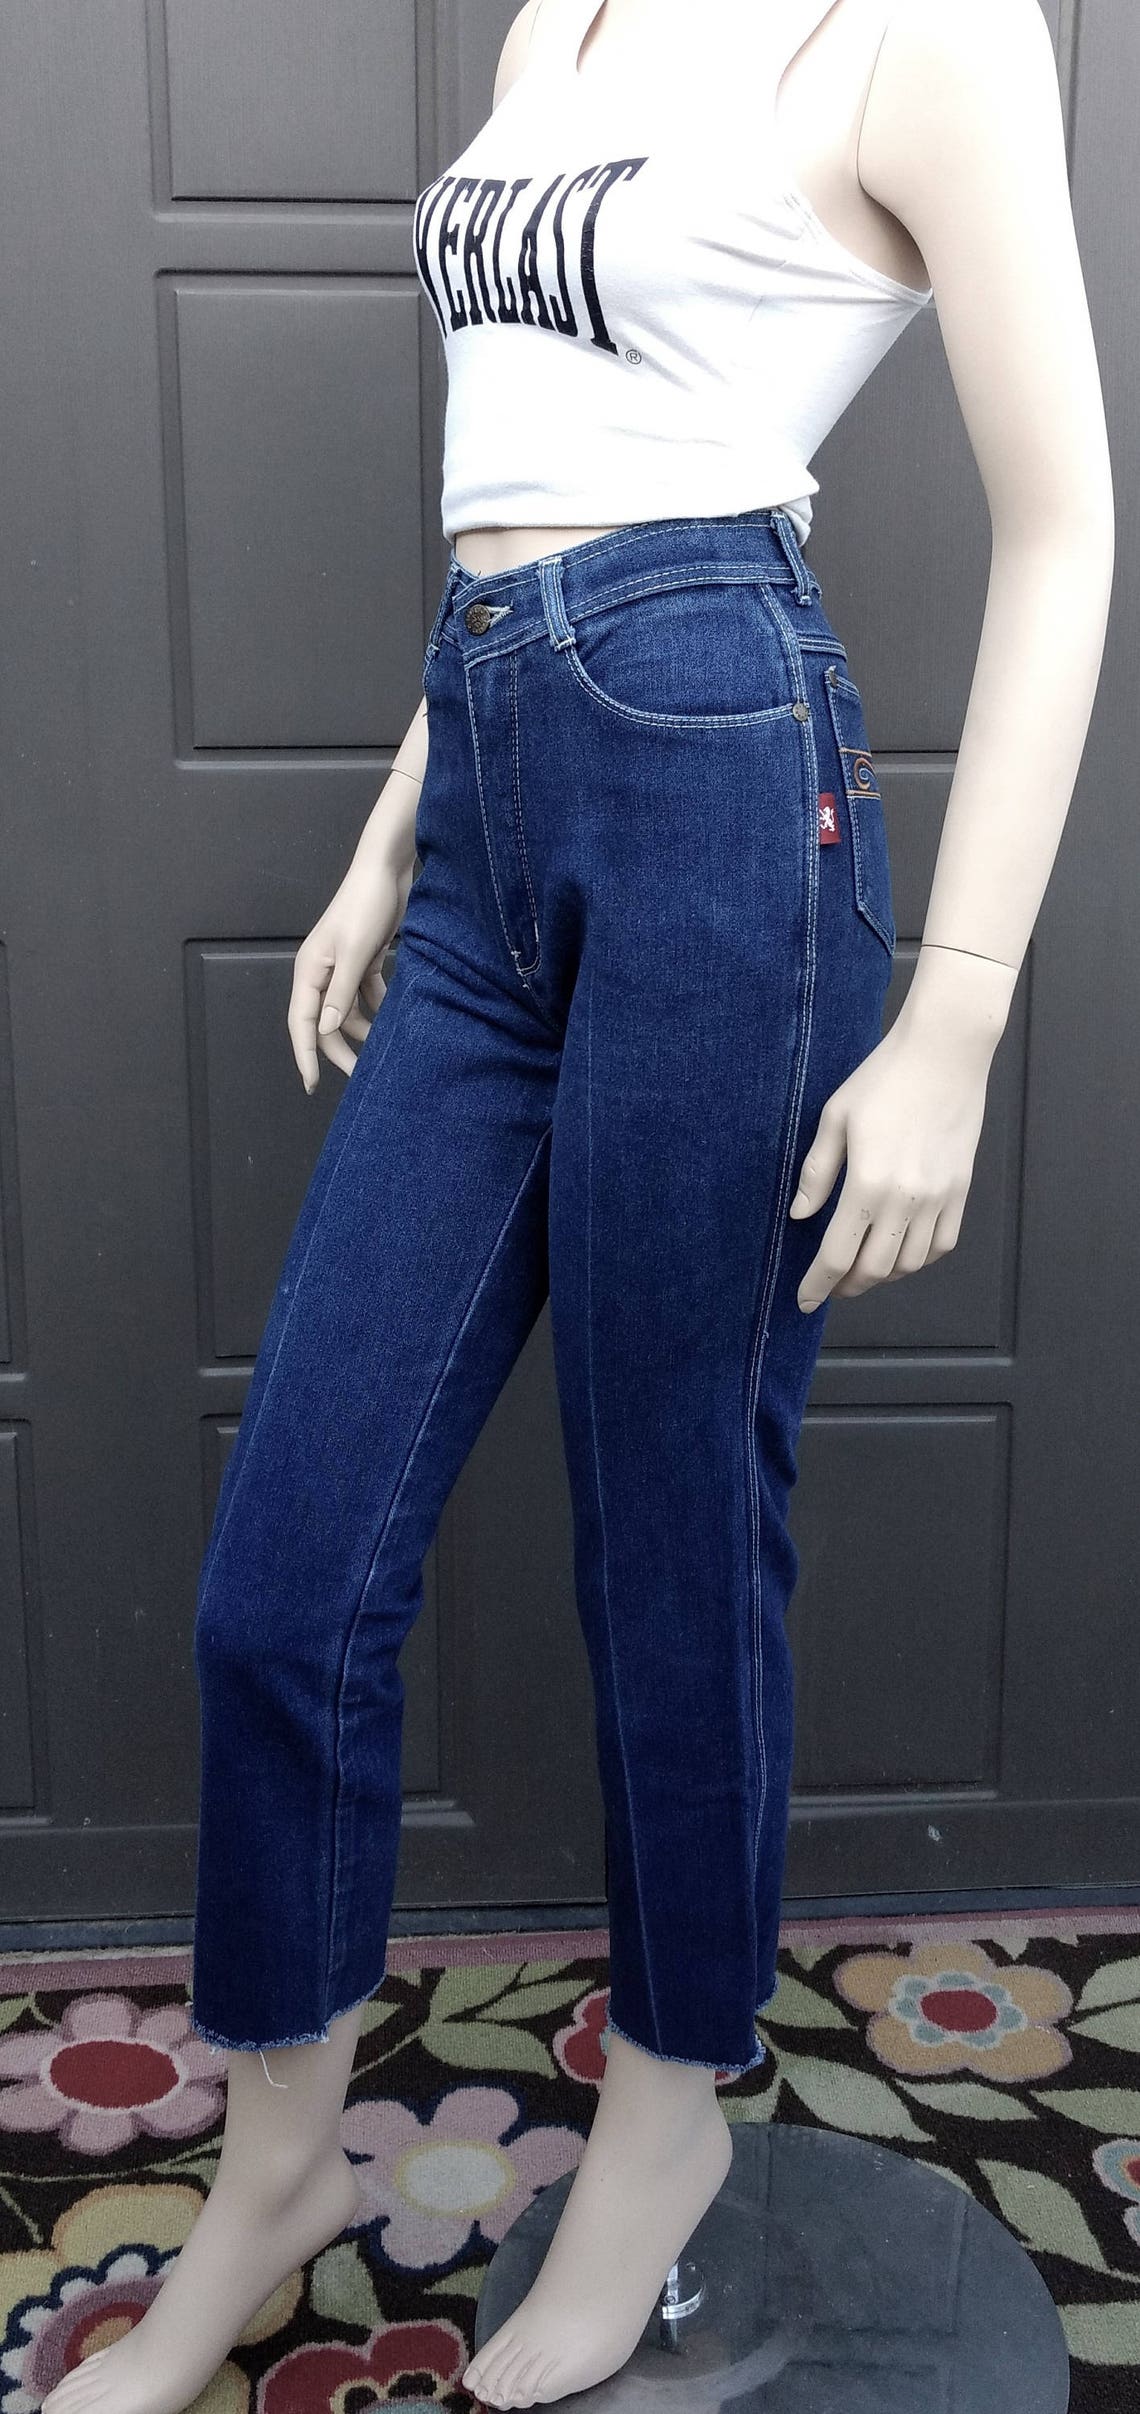 Braxton Jeans High Waisted Denim Jeans Vintage 70's Waist - Etsy